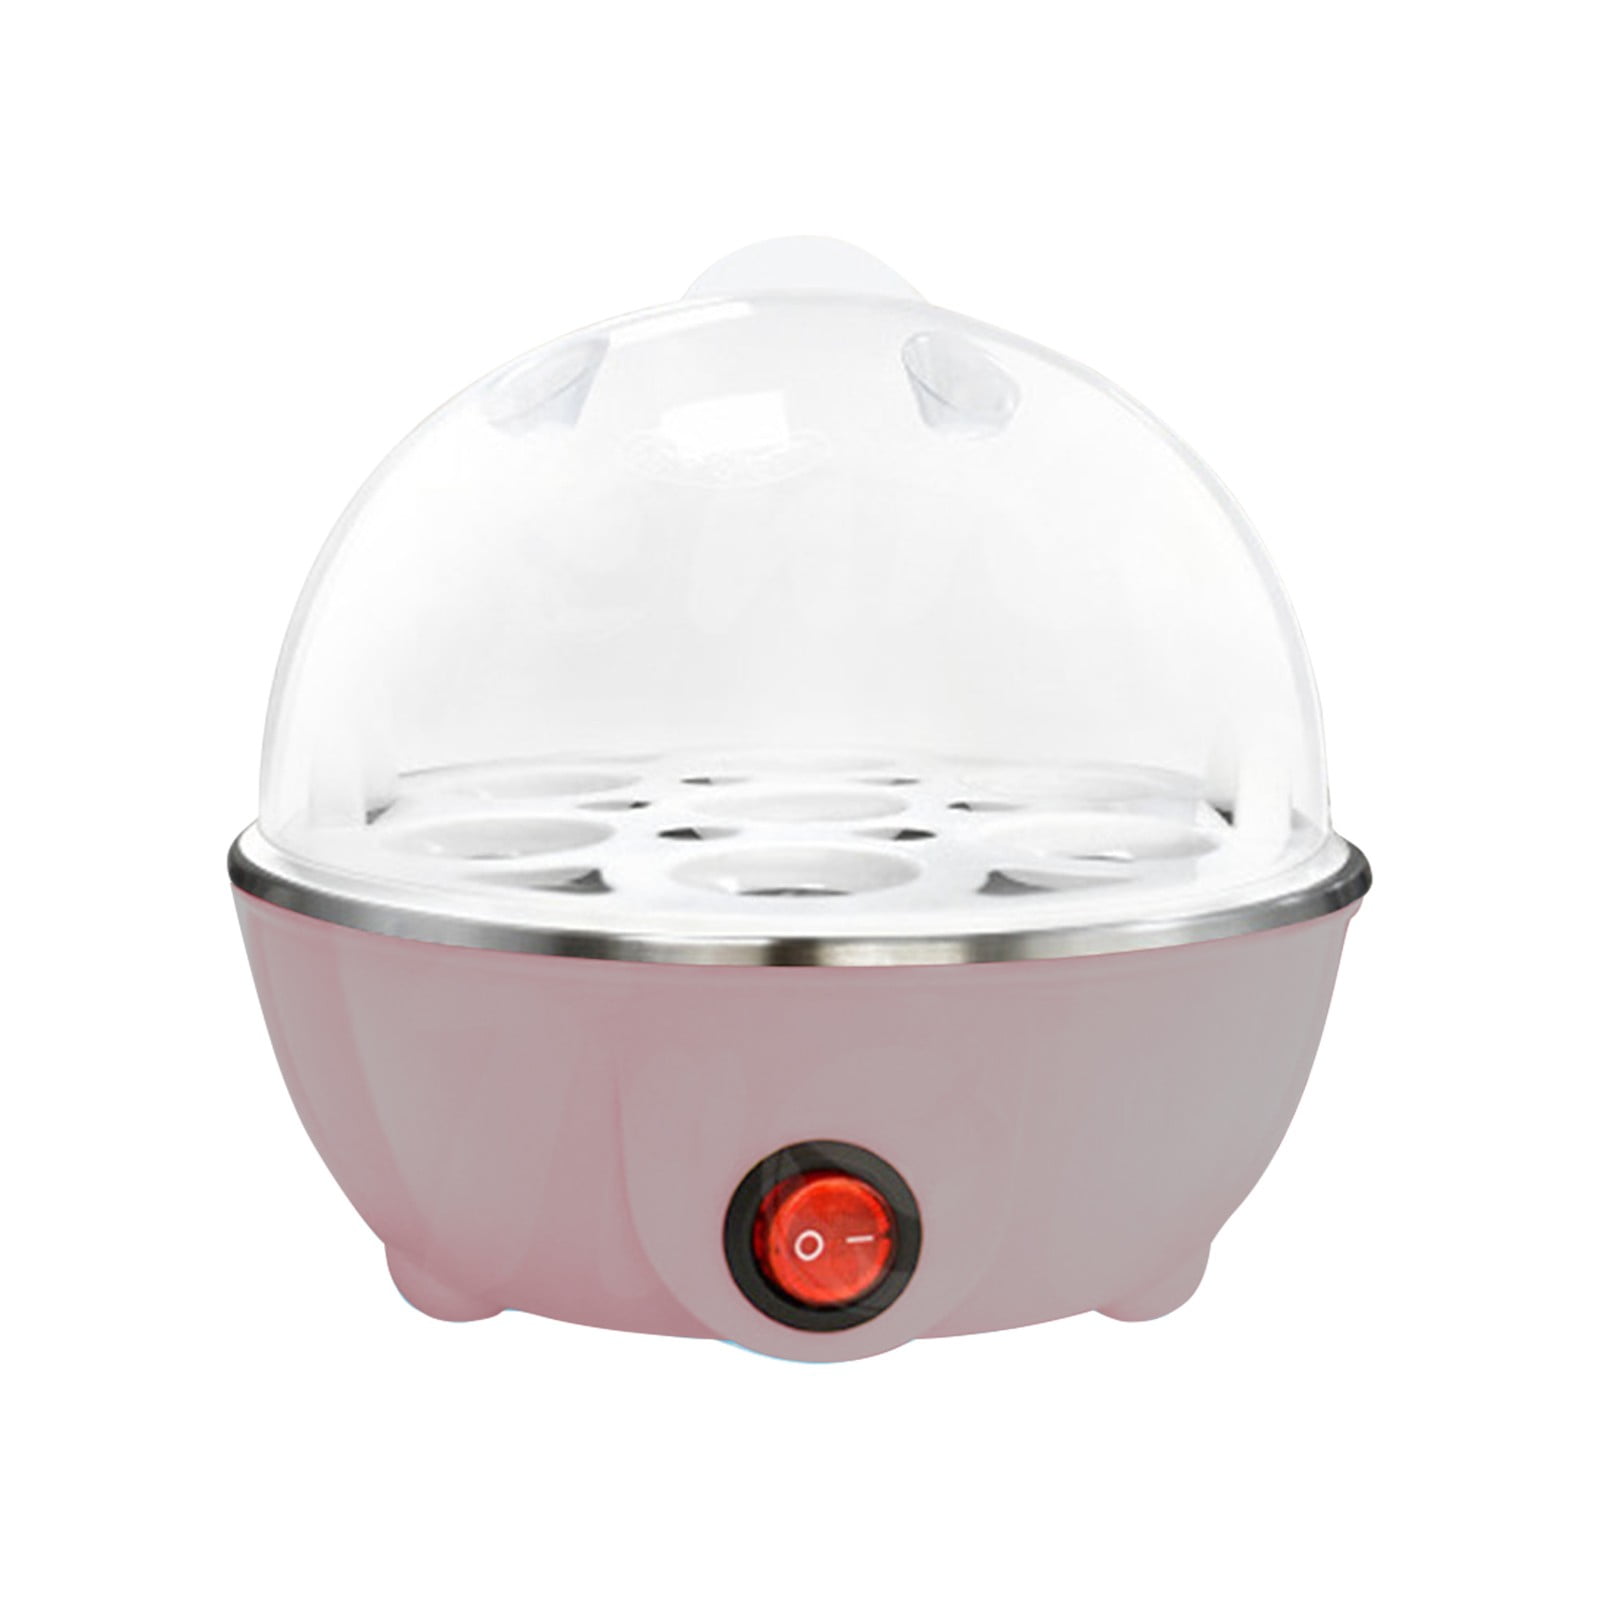 BECWARE Multifunctional Egg Cooker Smart Mini Electric Cooker 110V